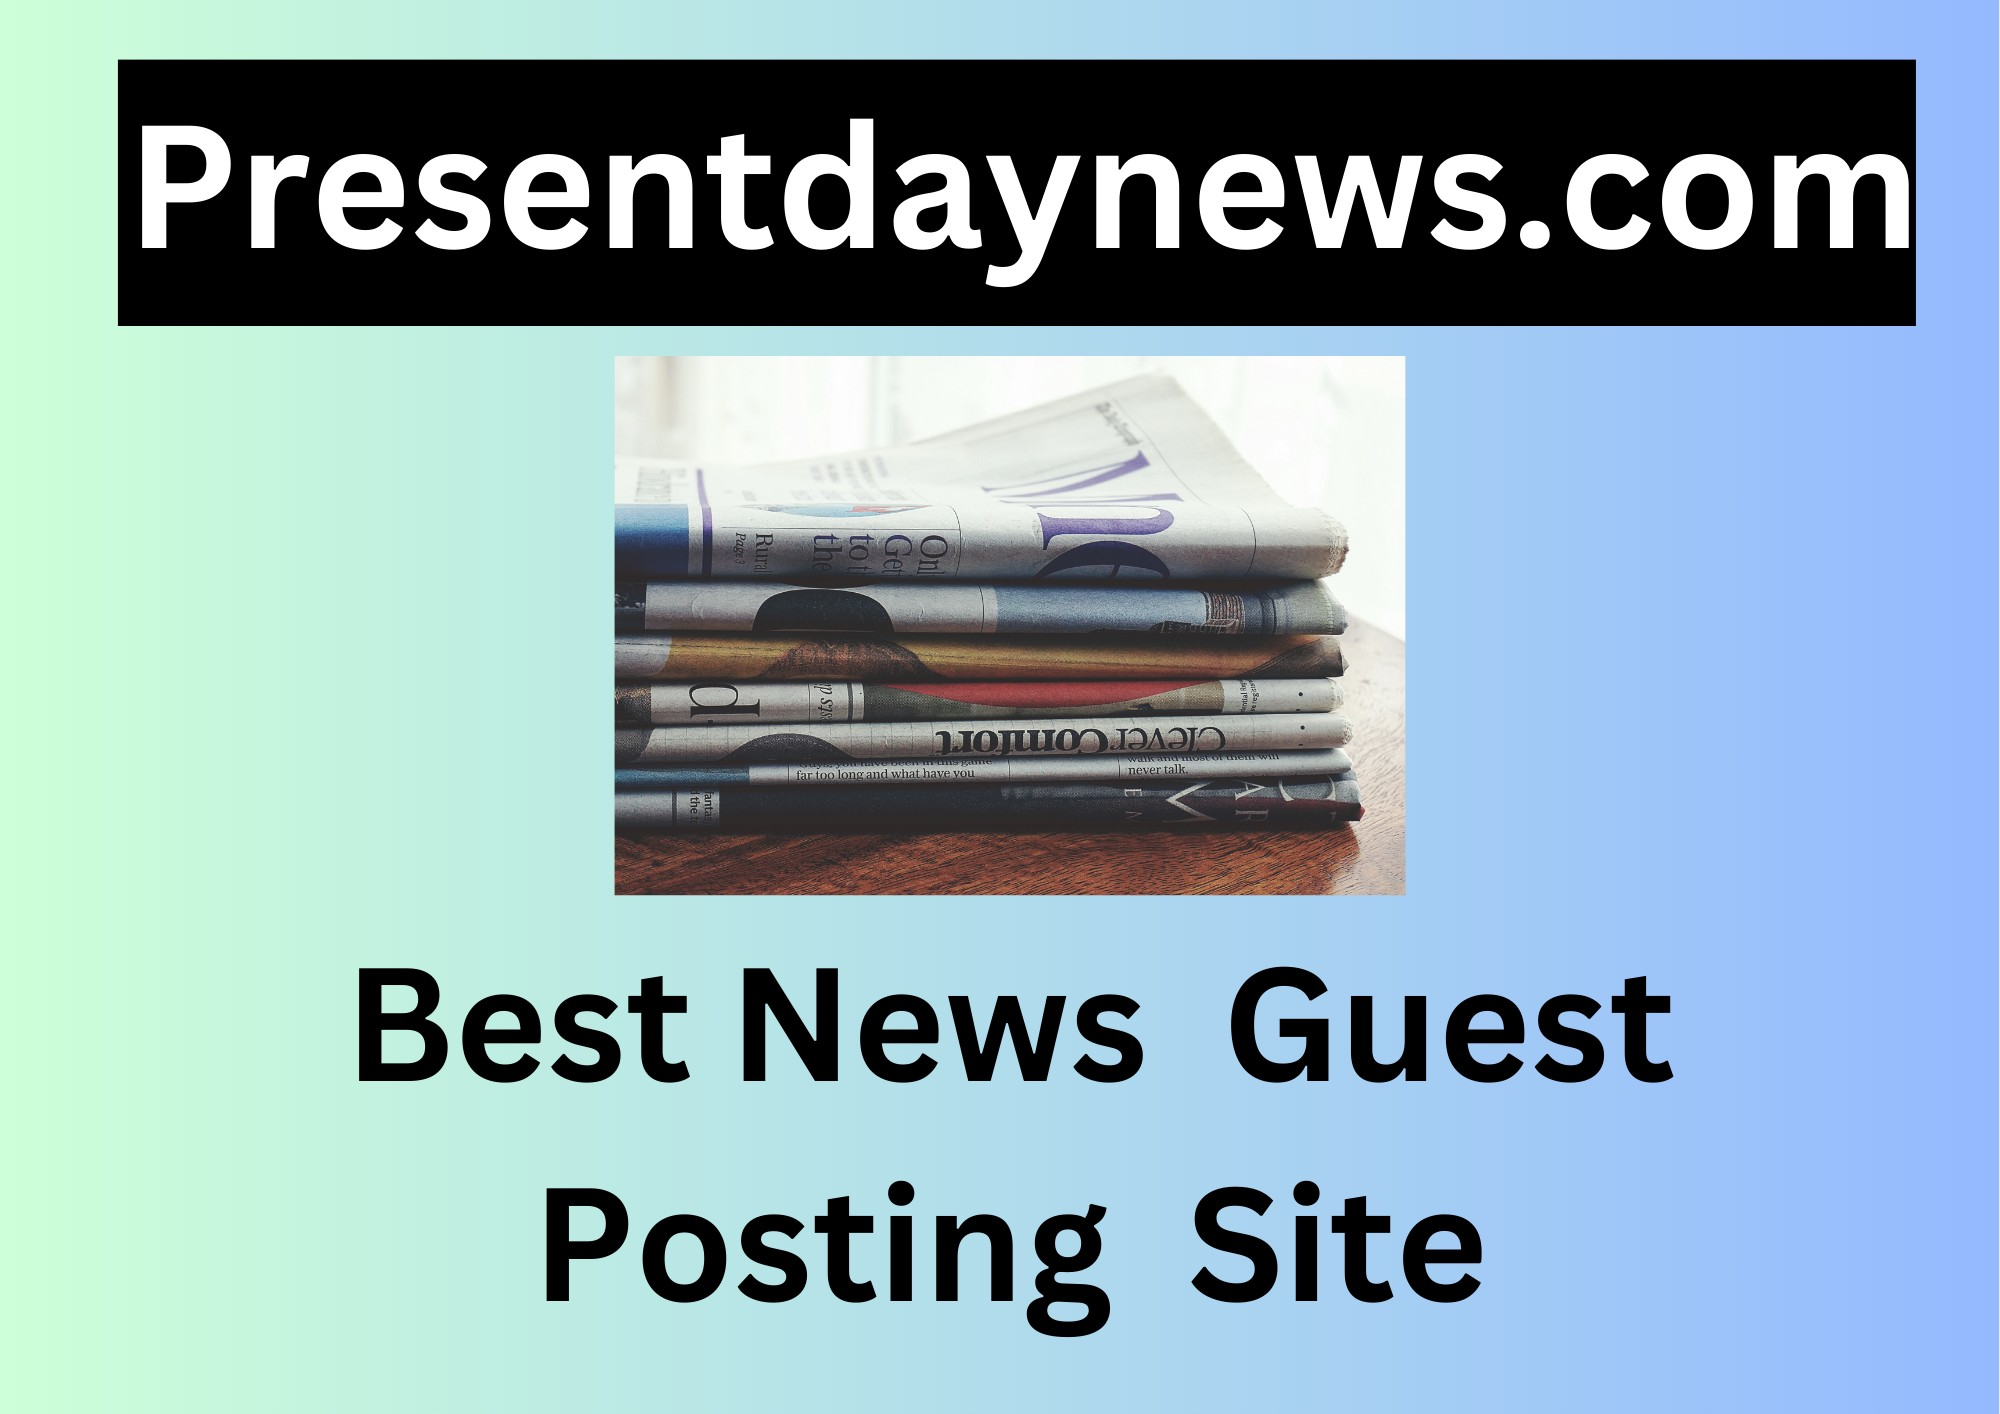 Presentdaynews.com — Best News Guest Posting Site